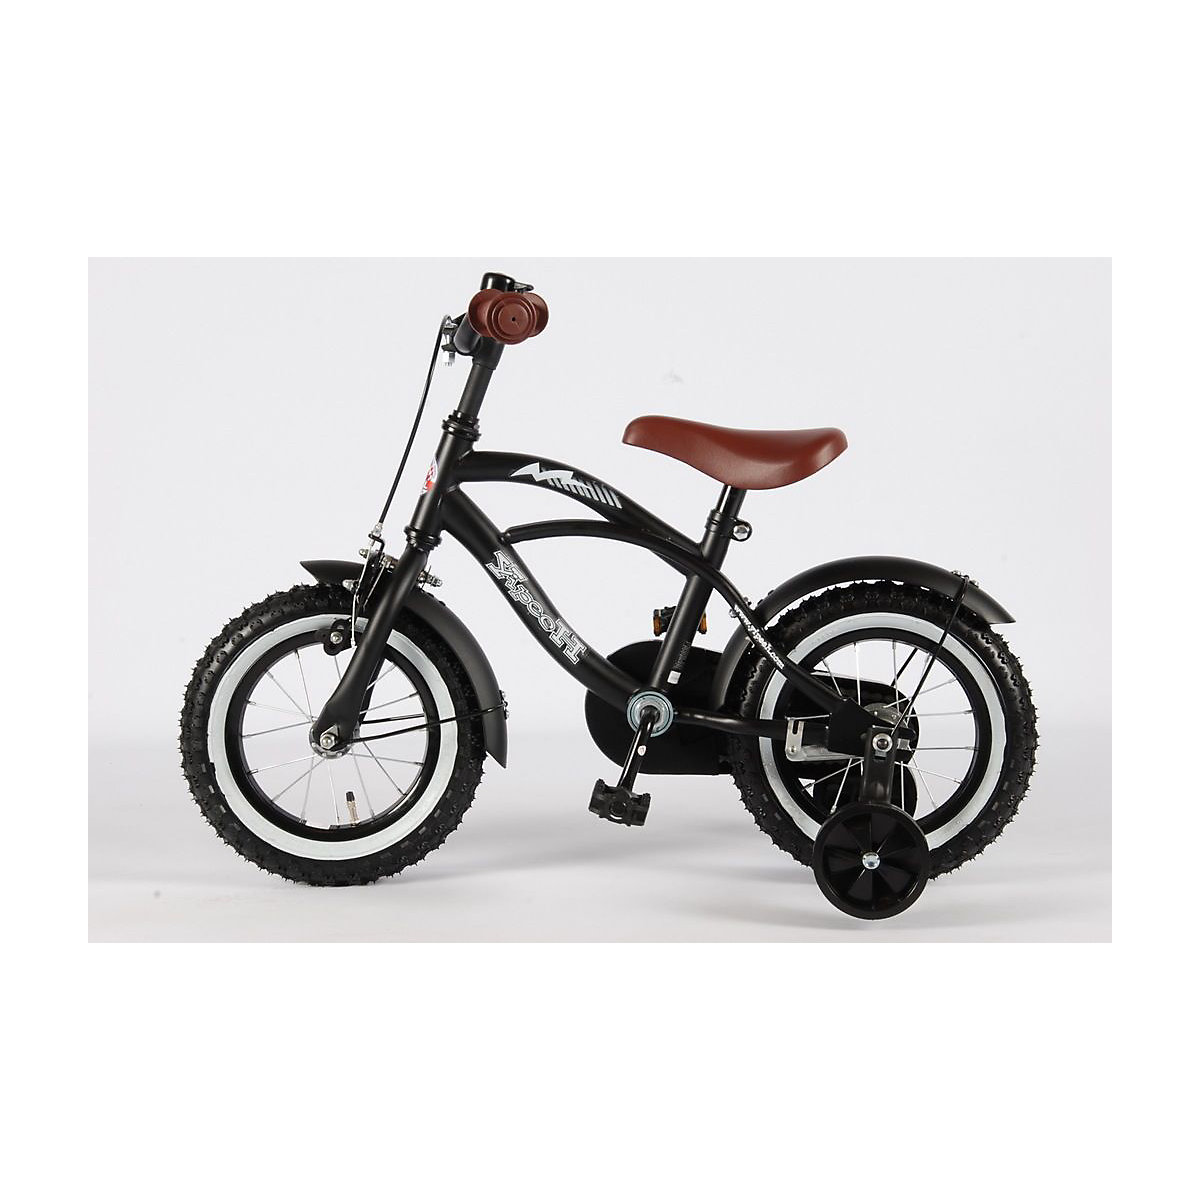 Kinderfahrräder Fahrrad 12 Zoll mit Motivauswahl Black Cruiser Kinderrad